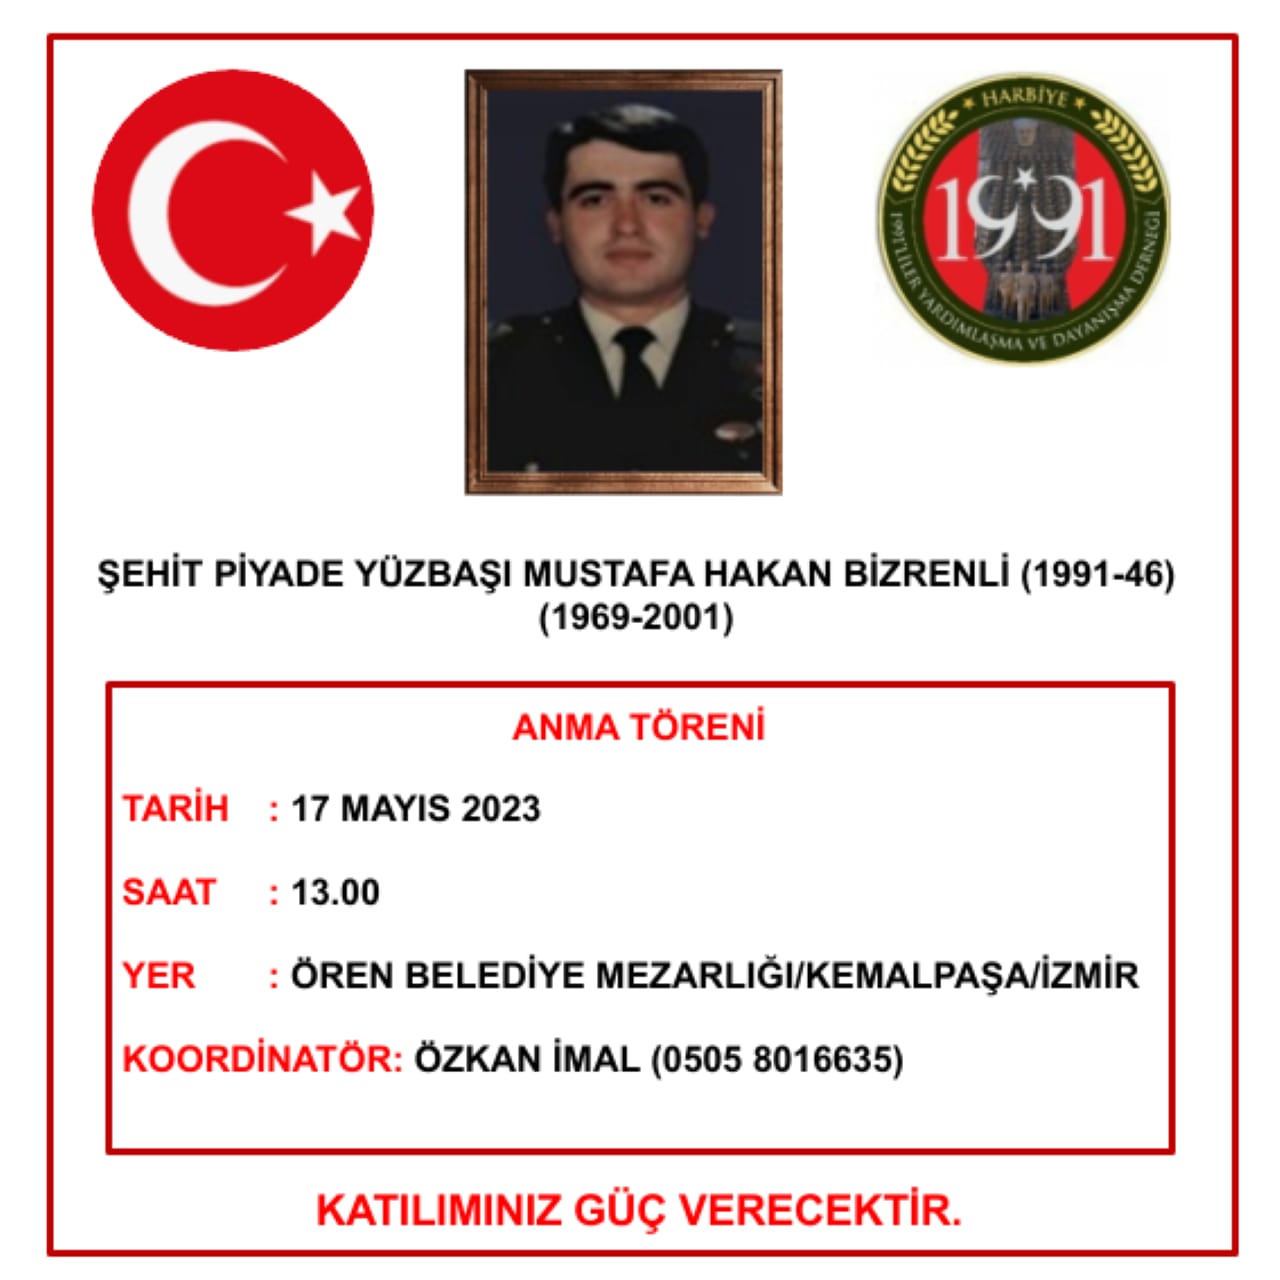 348 Şht.P.Yzb. Mustafa Hakan BİZRENLİ Anma Töreni (16.05.2023)